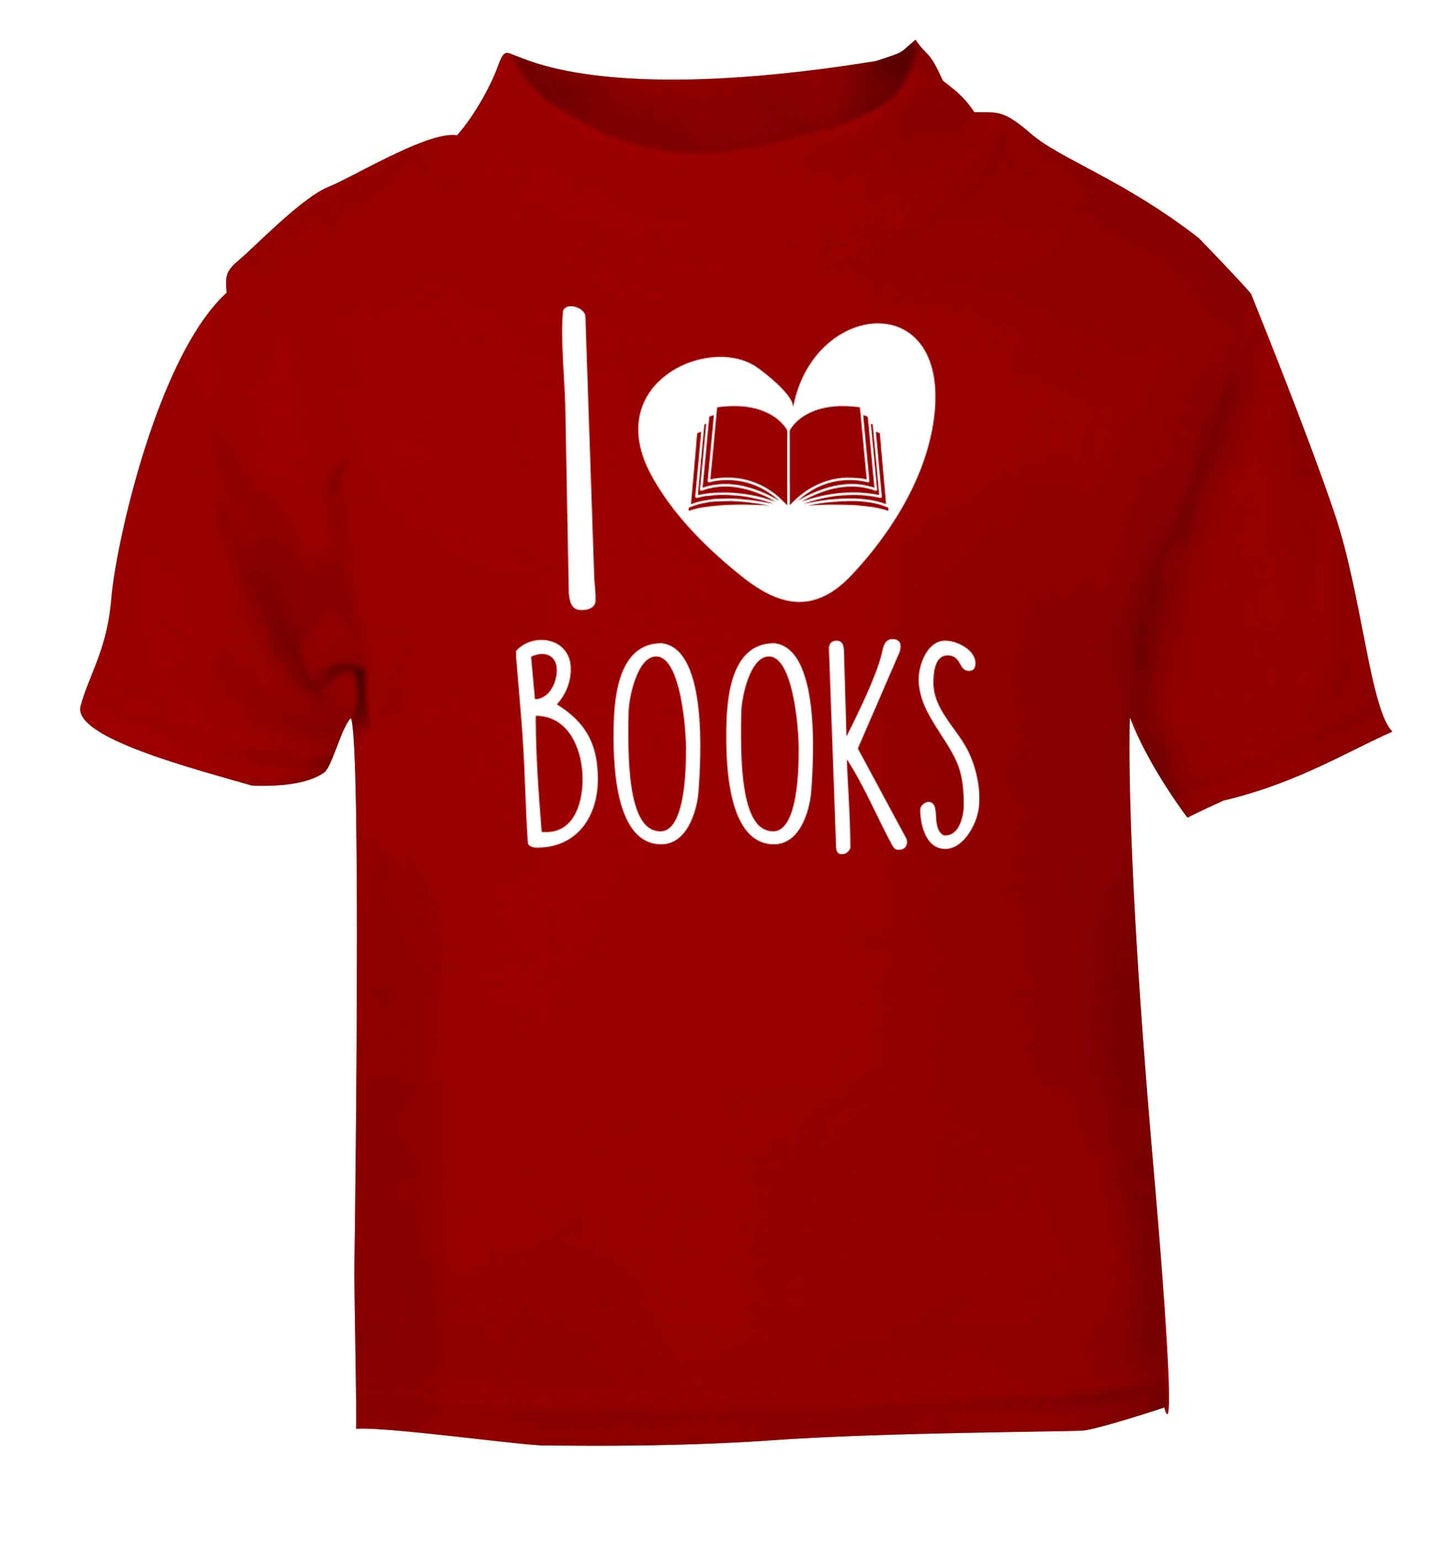 I love books red baby toddler Tshirt 2 Years